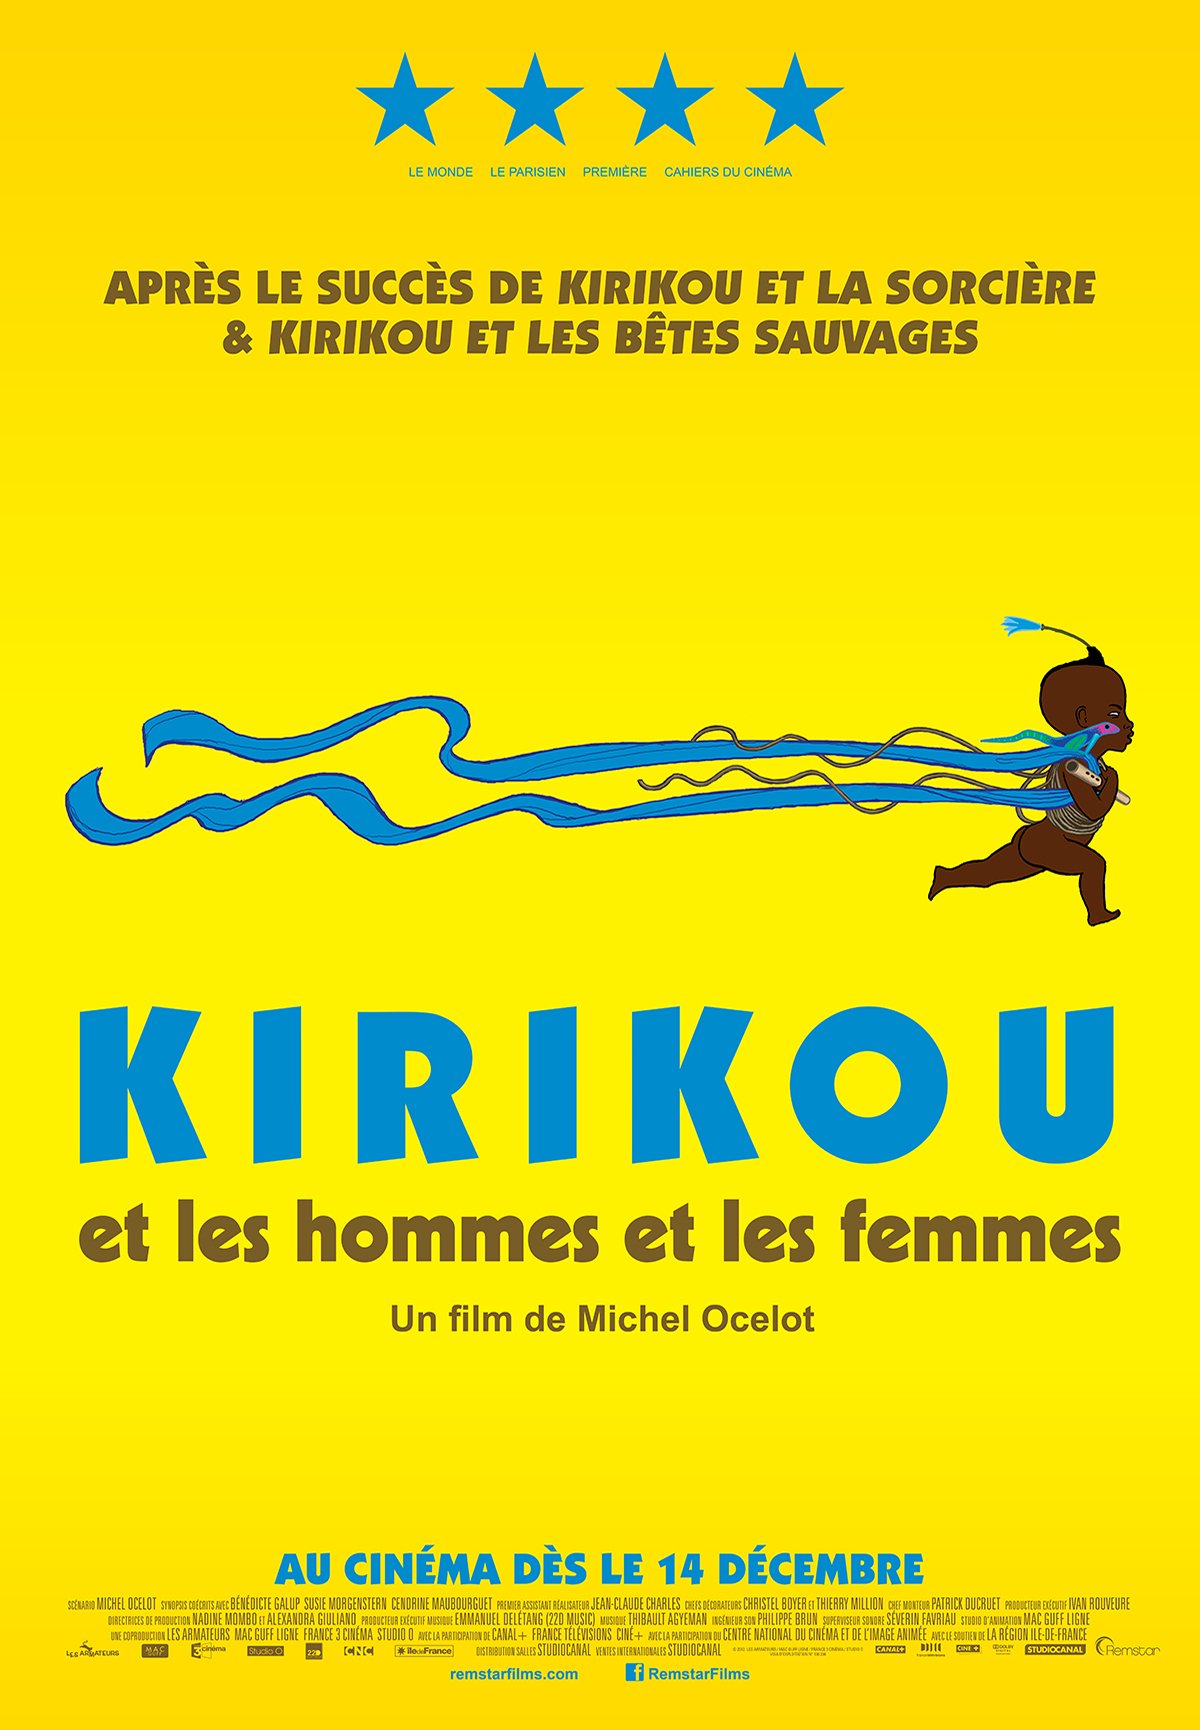 Poster of the movie Kirikou et les hommes et les femmes